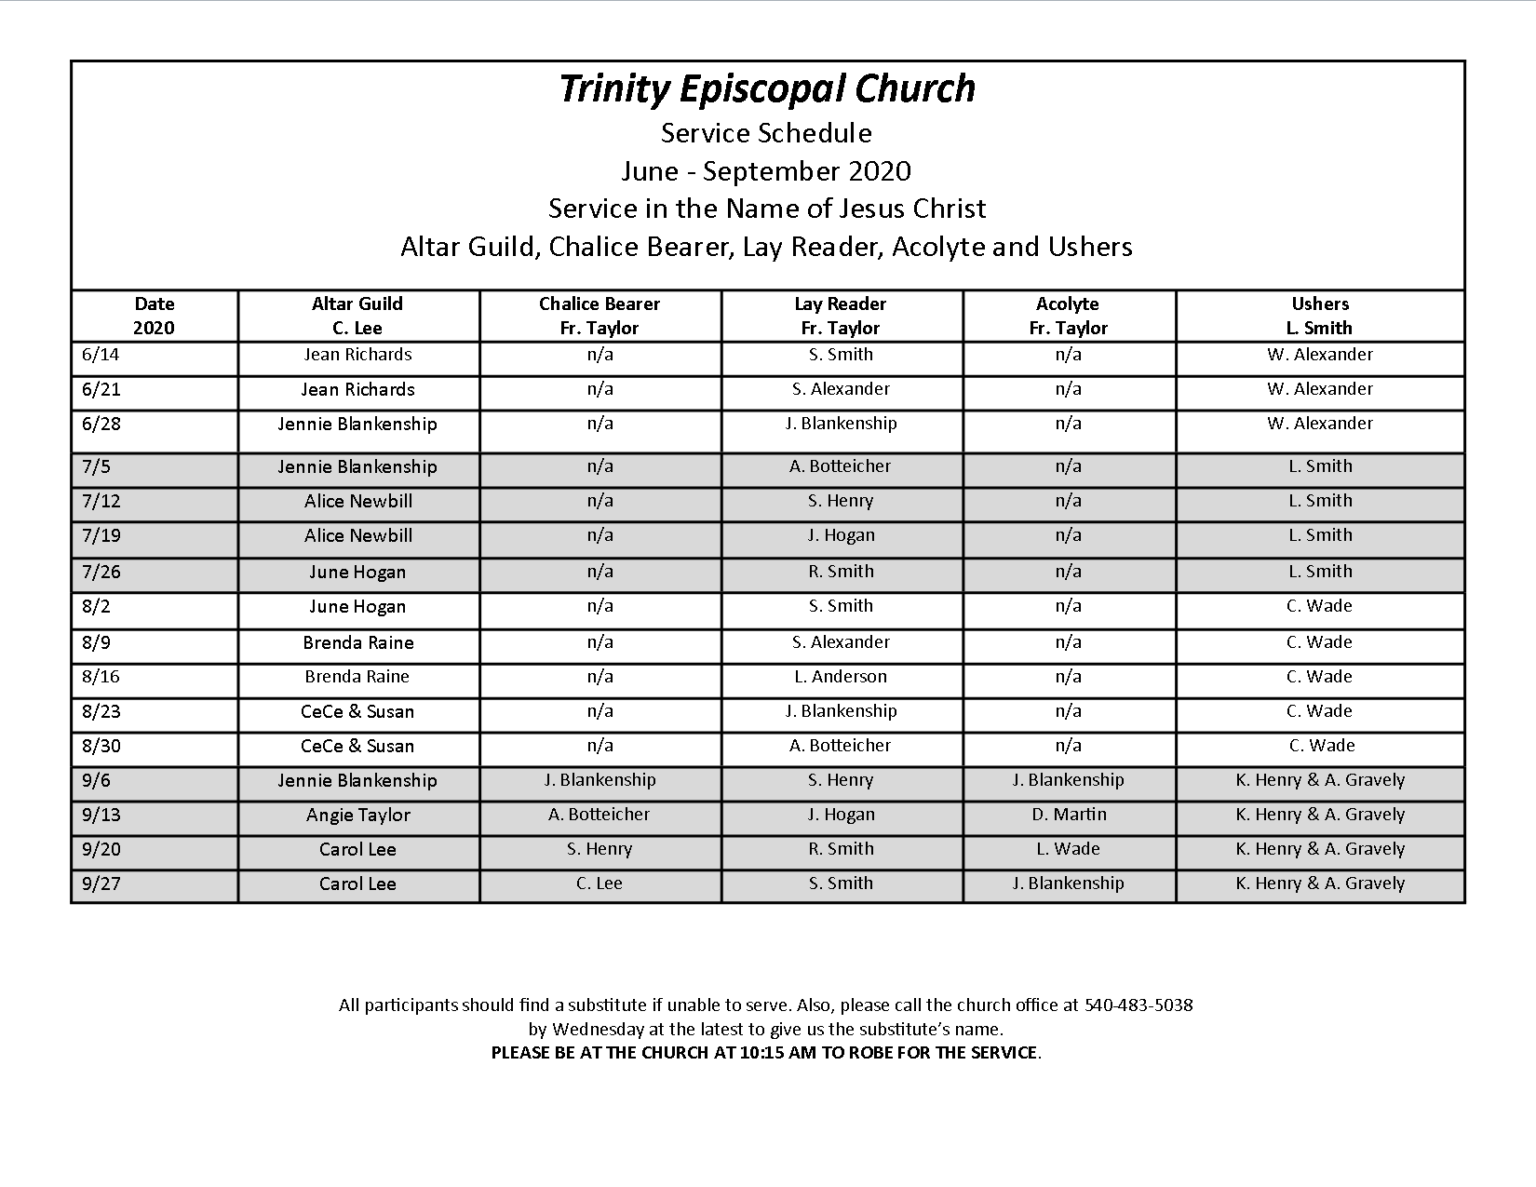 Trinity Episcopal Church Calendar and Announcements